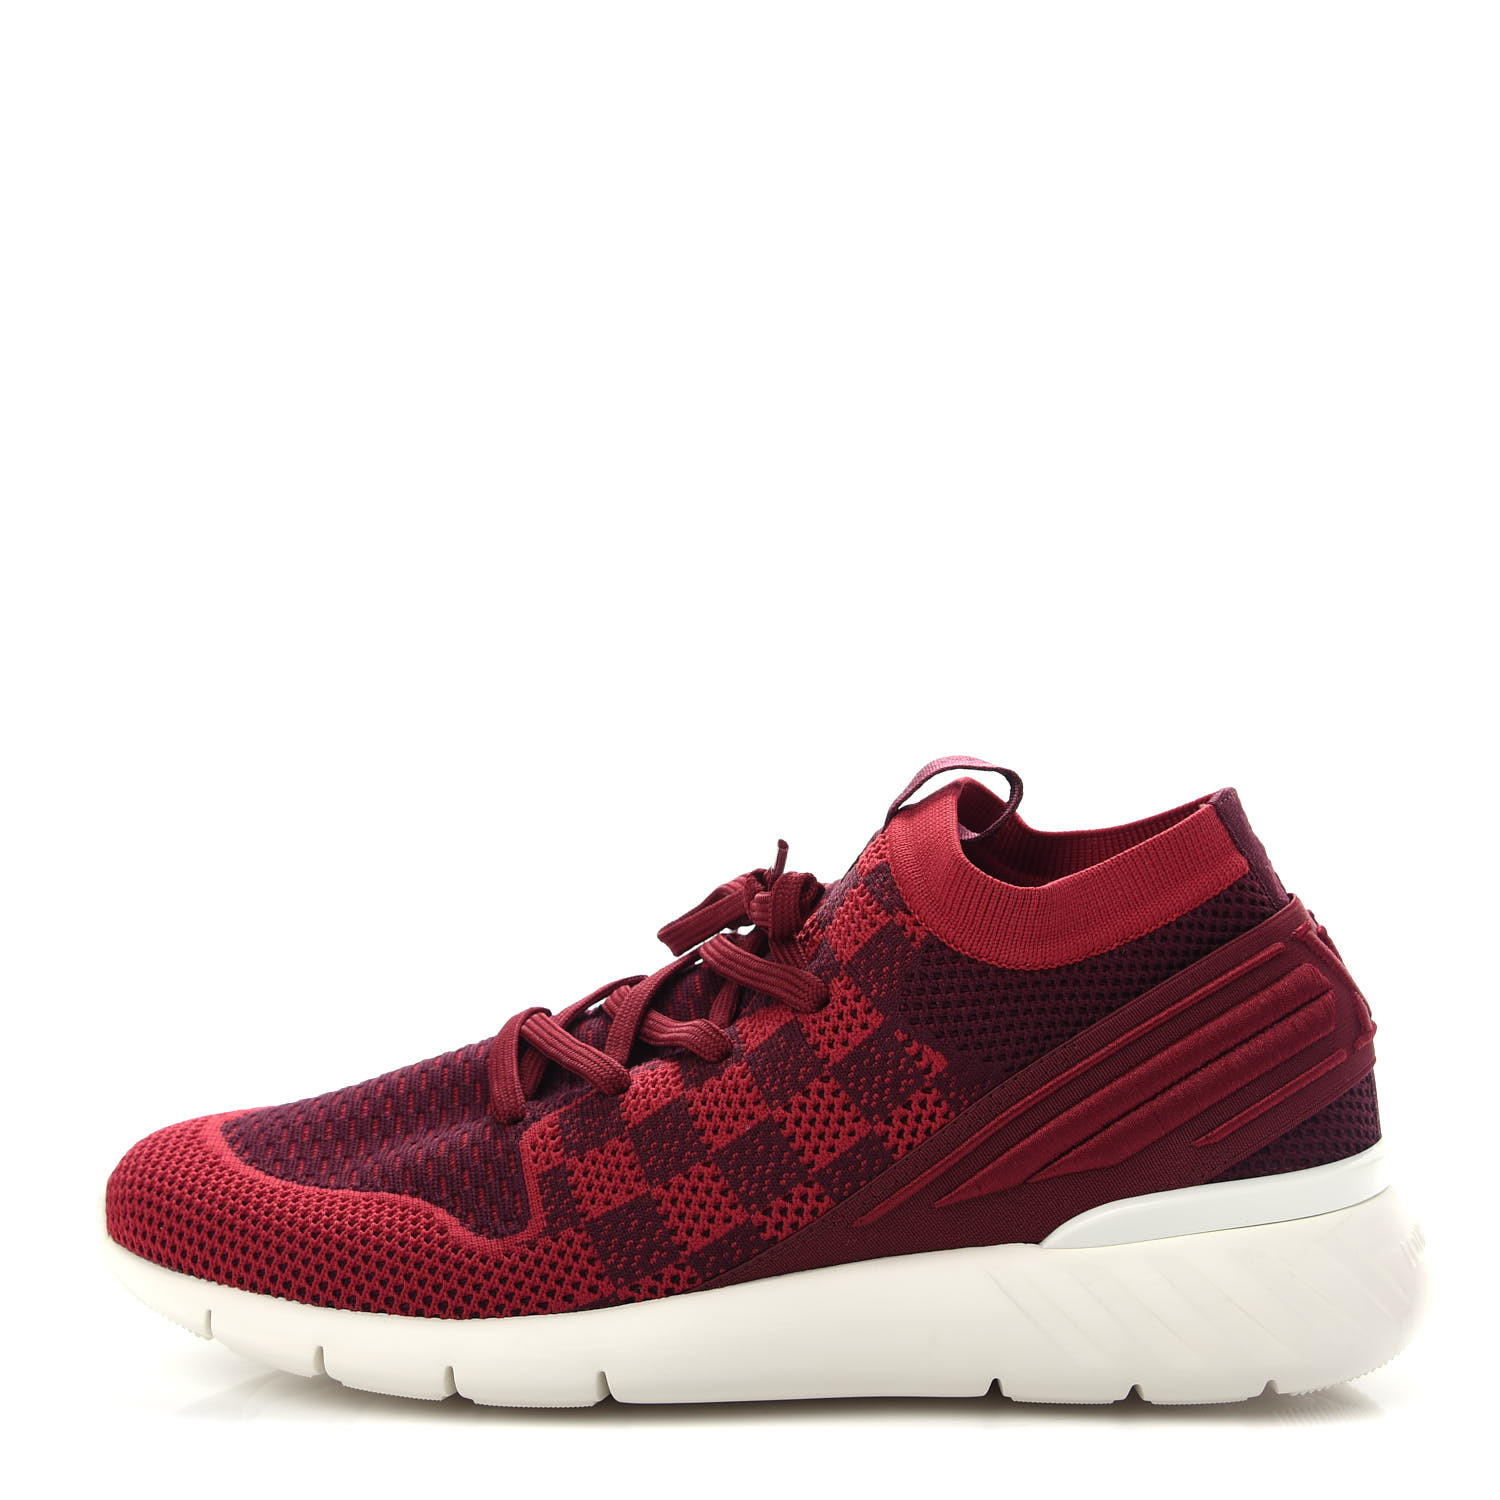 LOUIS VUITTON Knit Damier Fastlane Sneakers 7.5 Burgundy Red 705548 ...